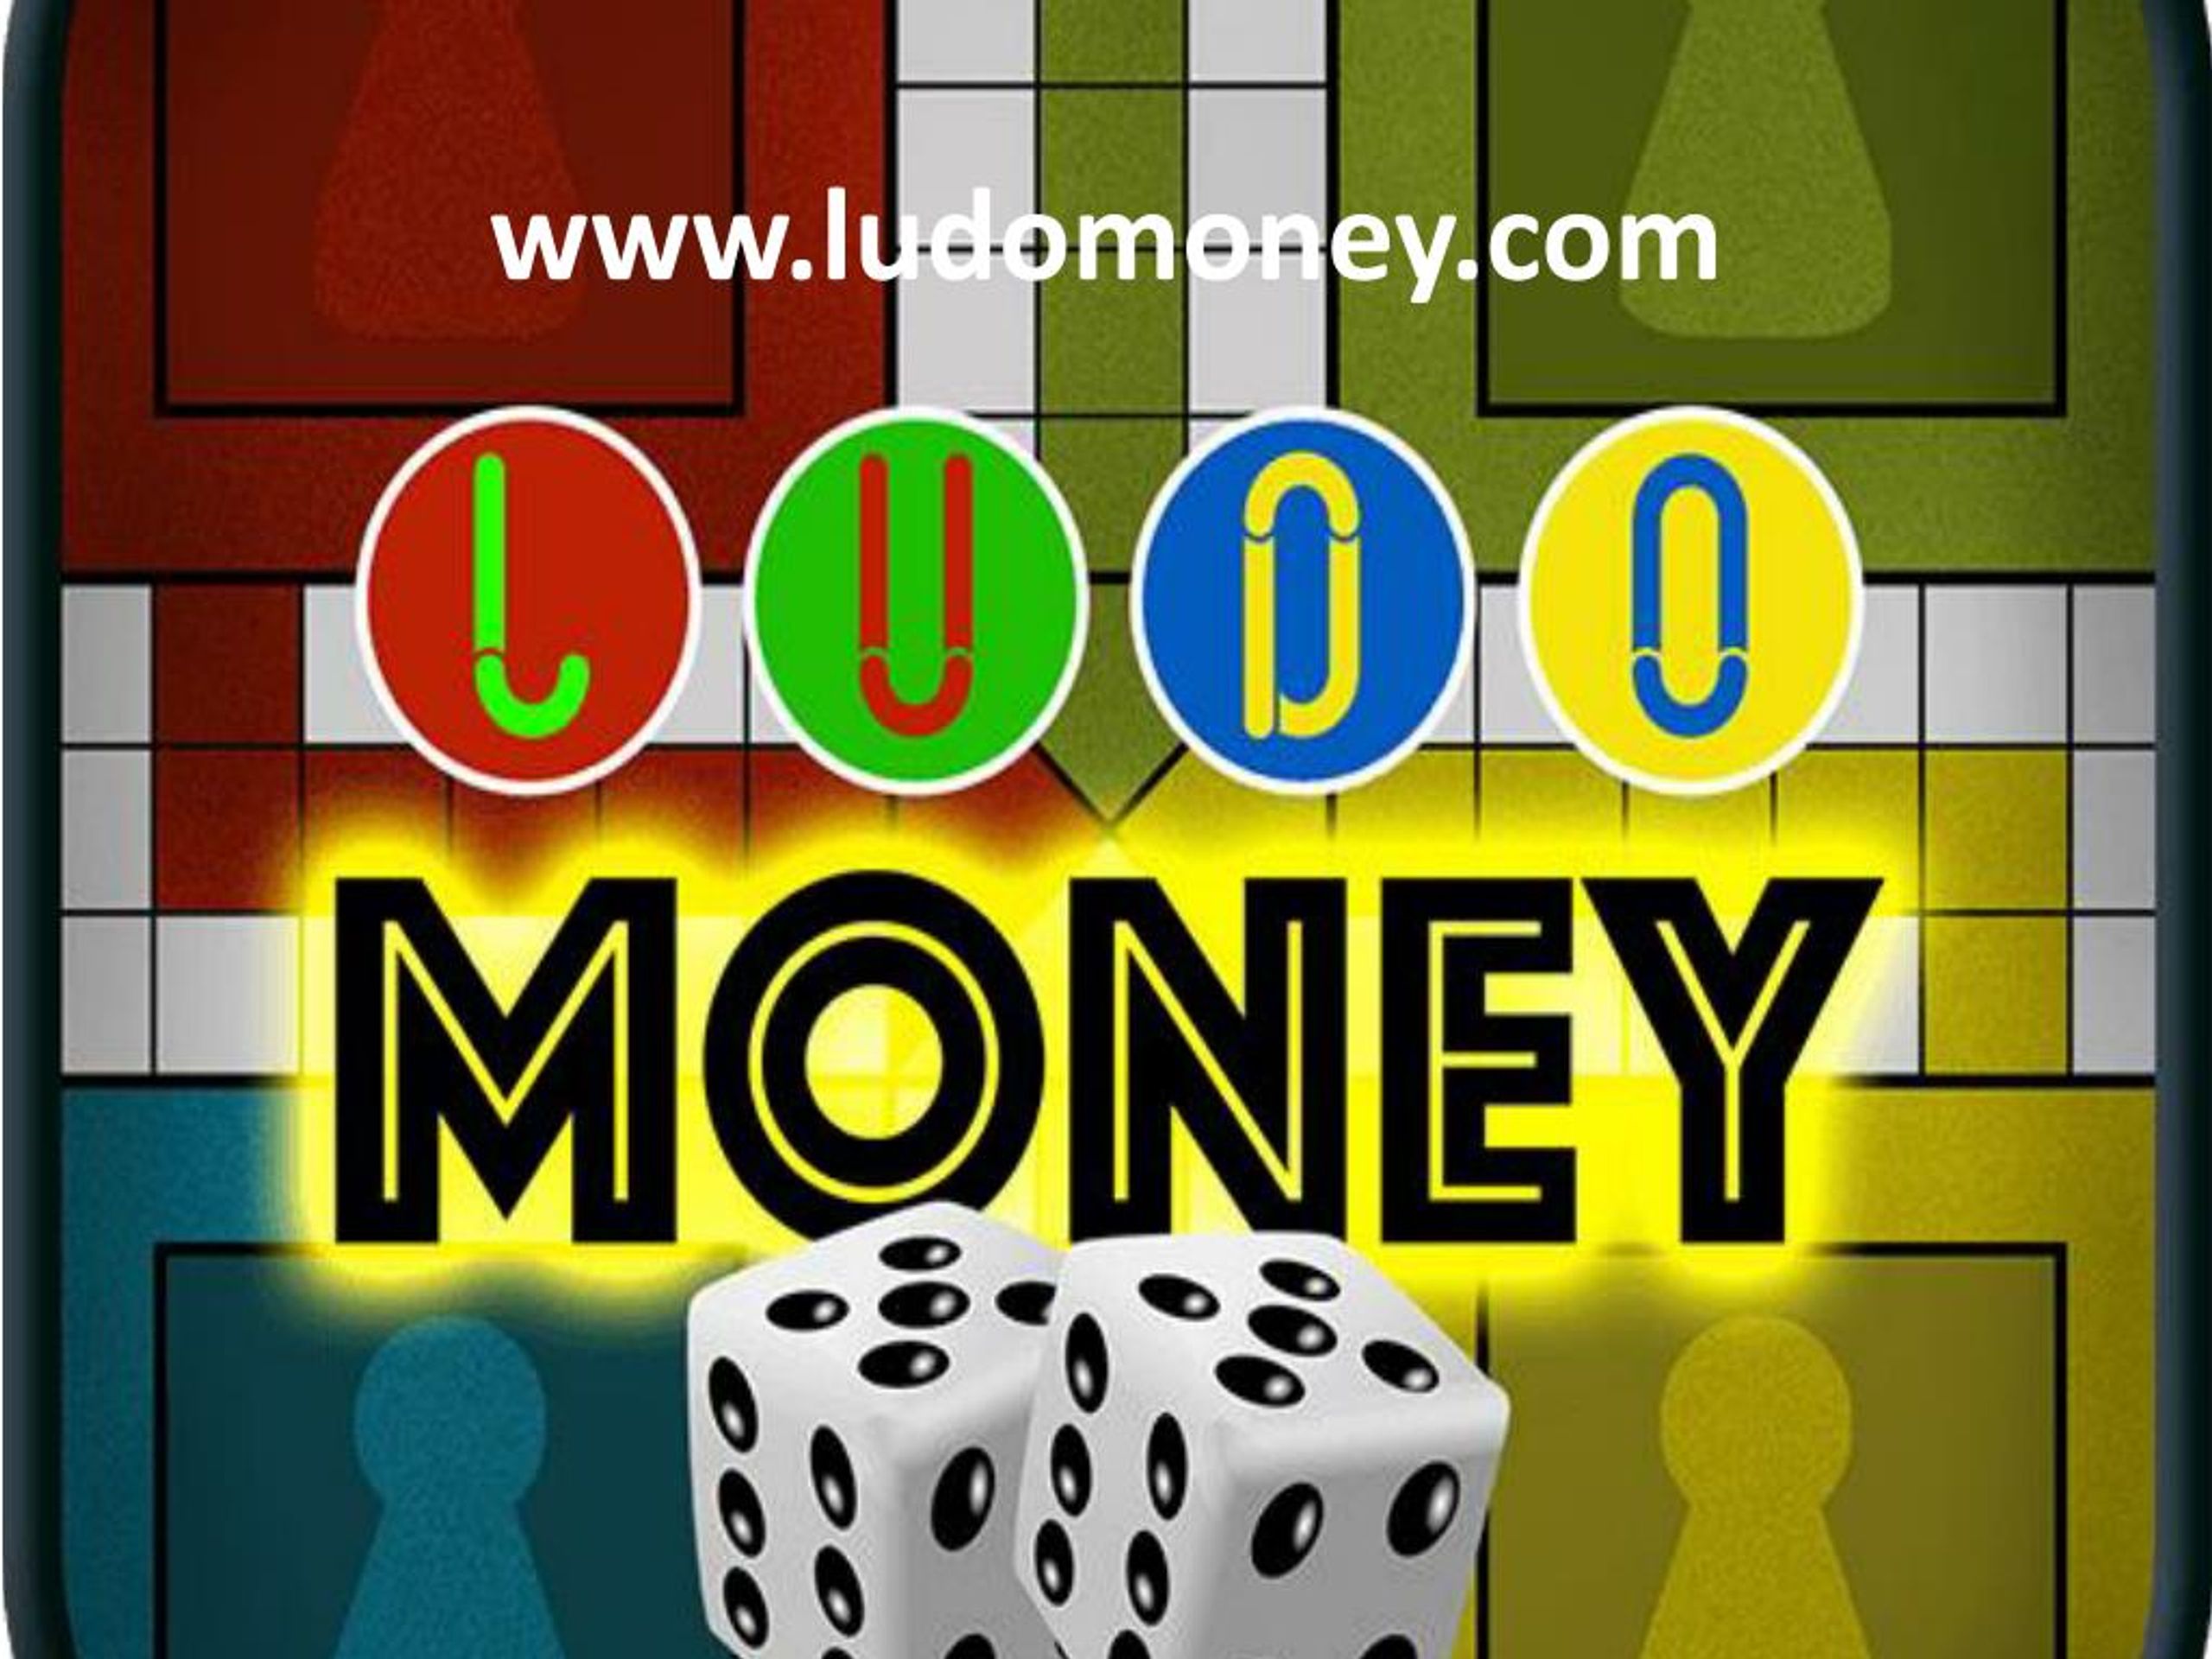 PPT - Play Ludo Money Game Online- Ludo Money PowerPoint Presentation